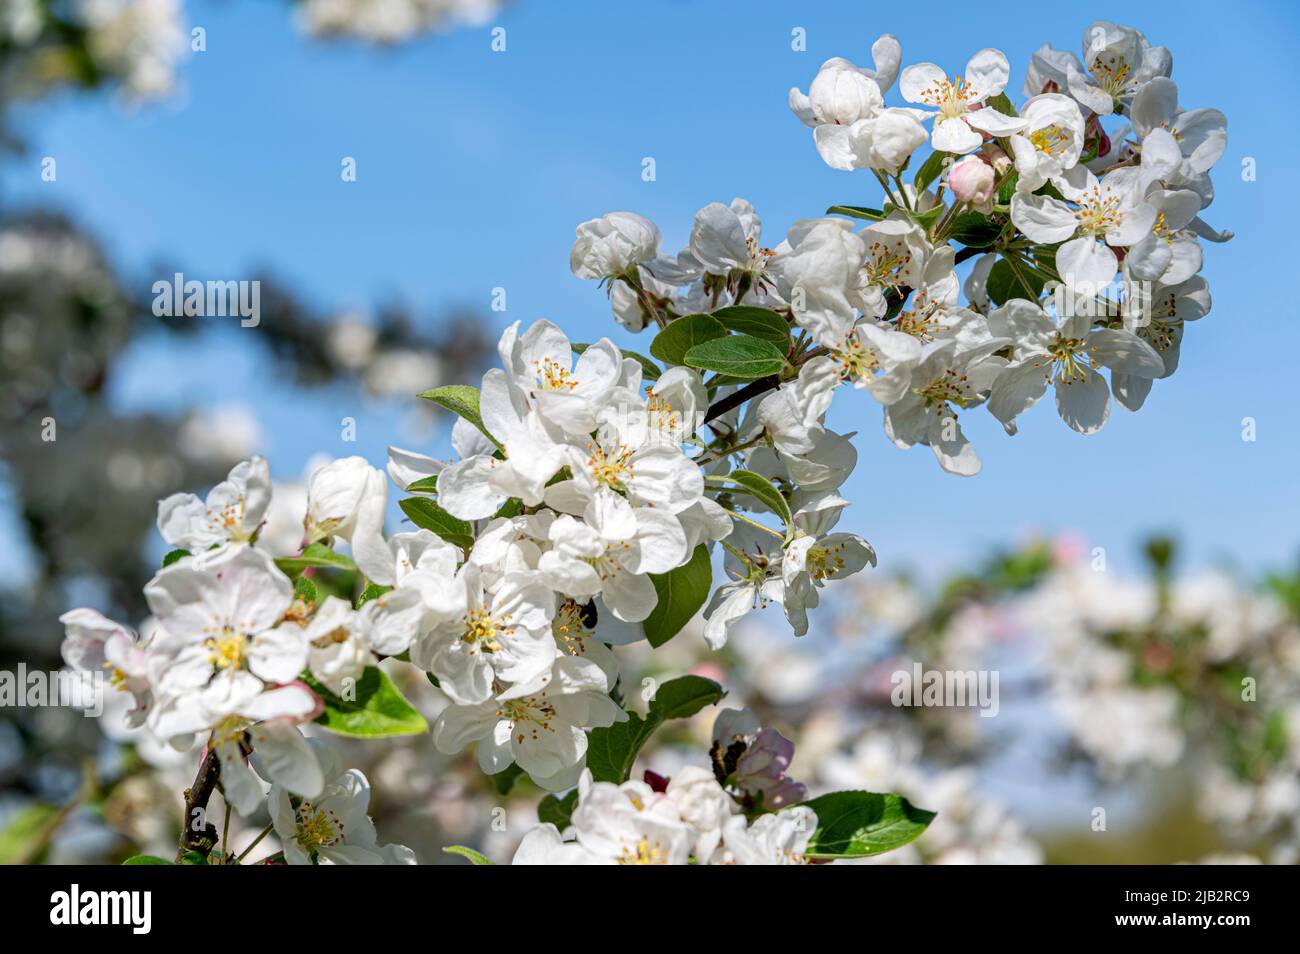 Malus Evereste, manzana de cangrejo Evereste, Malus perpetuu, Rosaceae.Flores blancas o florecen en abundancia en este árbol llamativo. Foto de stock